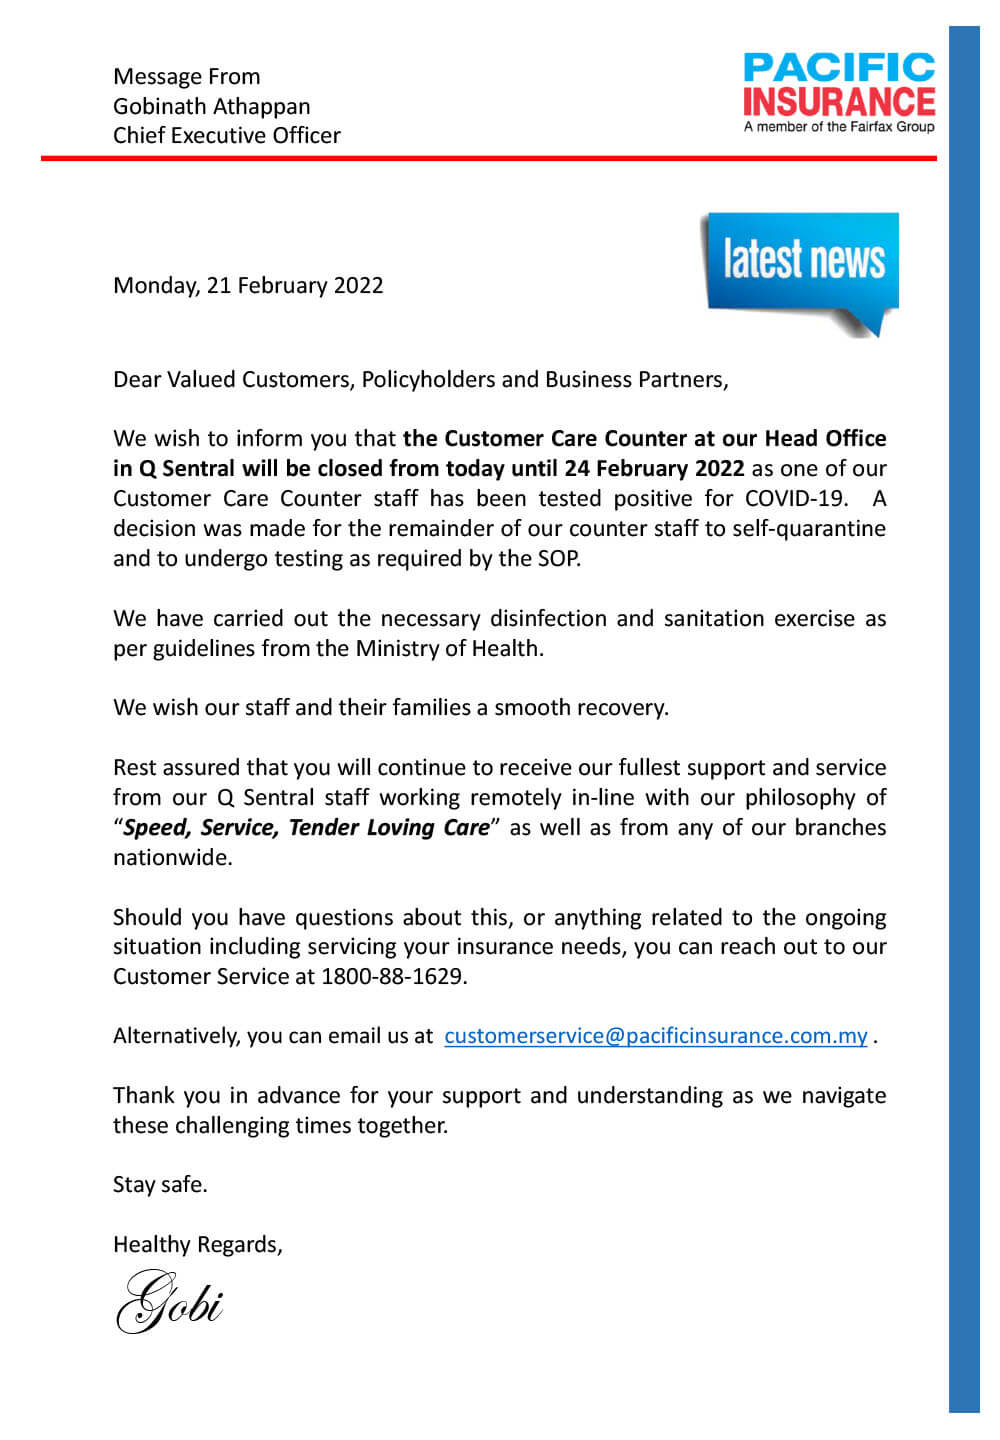 Closure of TPIB Head Office Customer Service Counter Until 24 February 2022